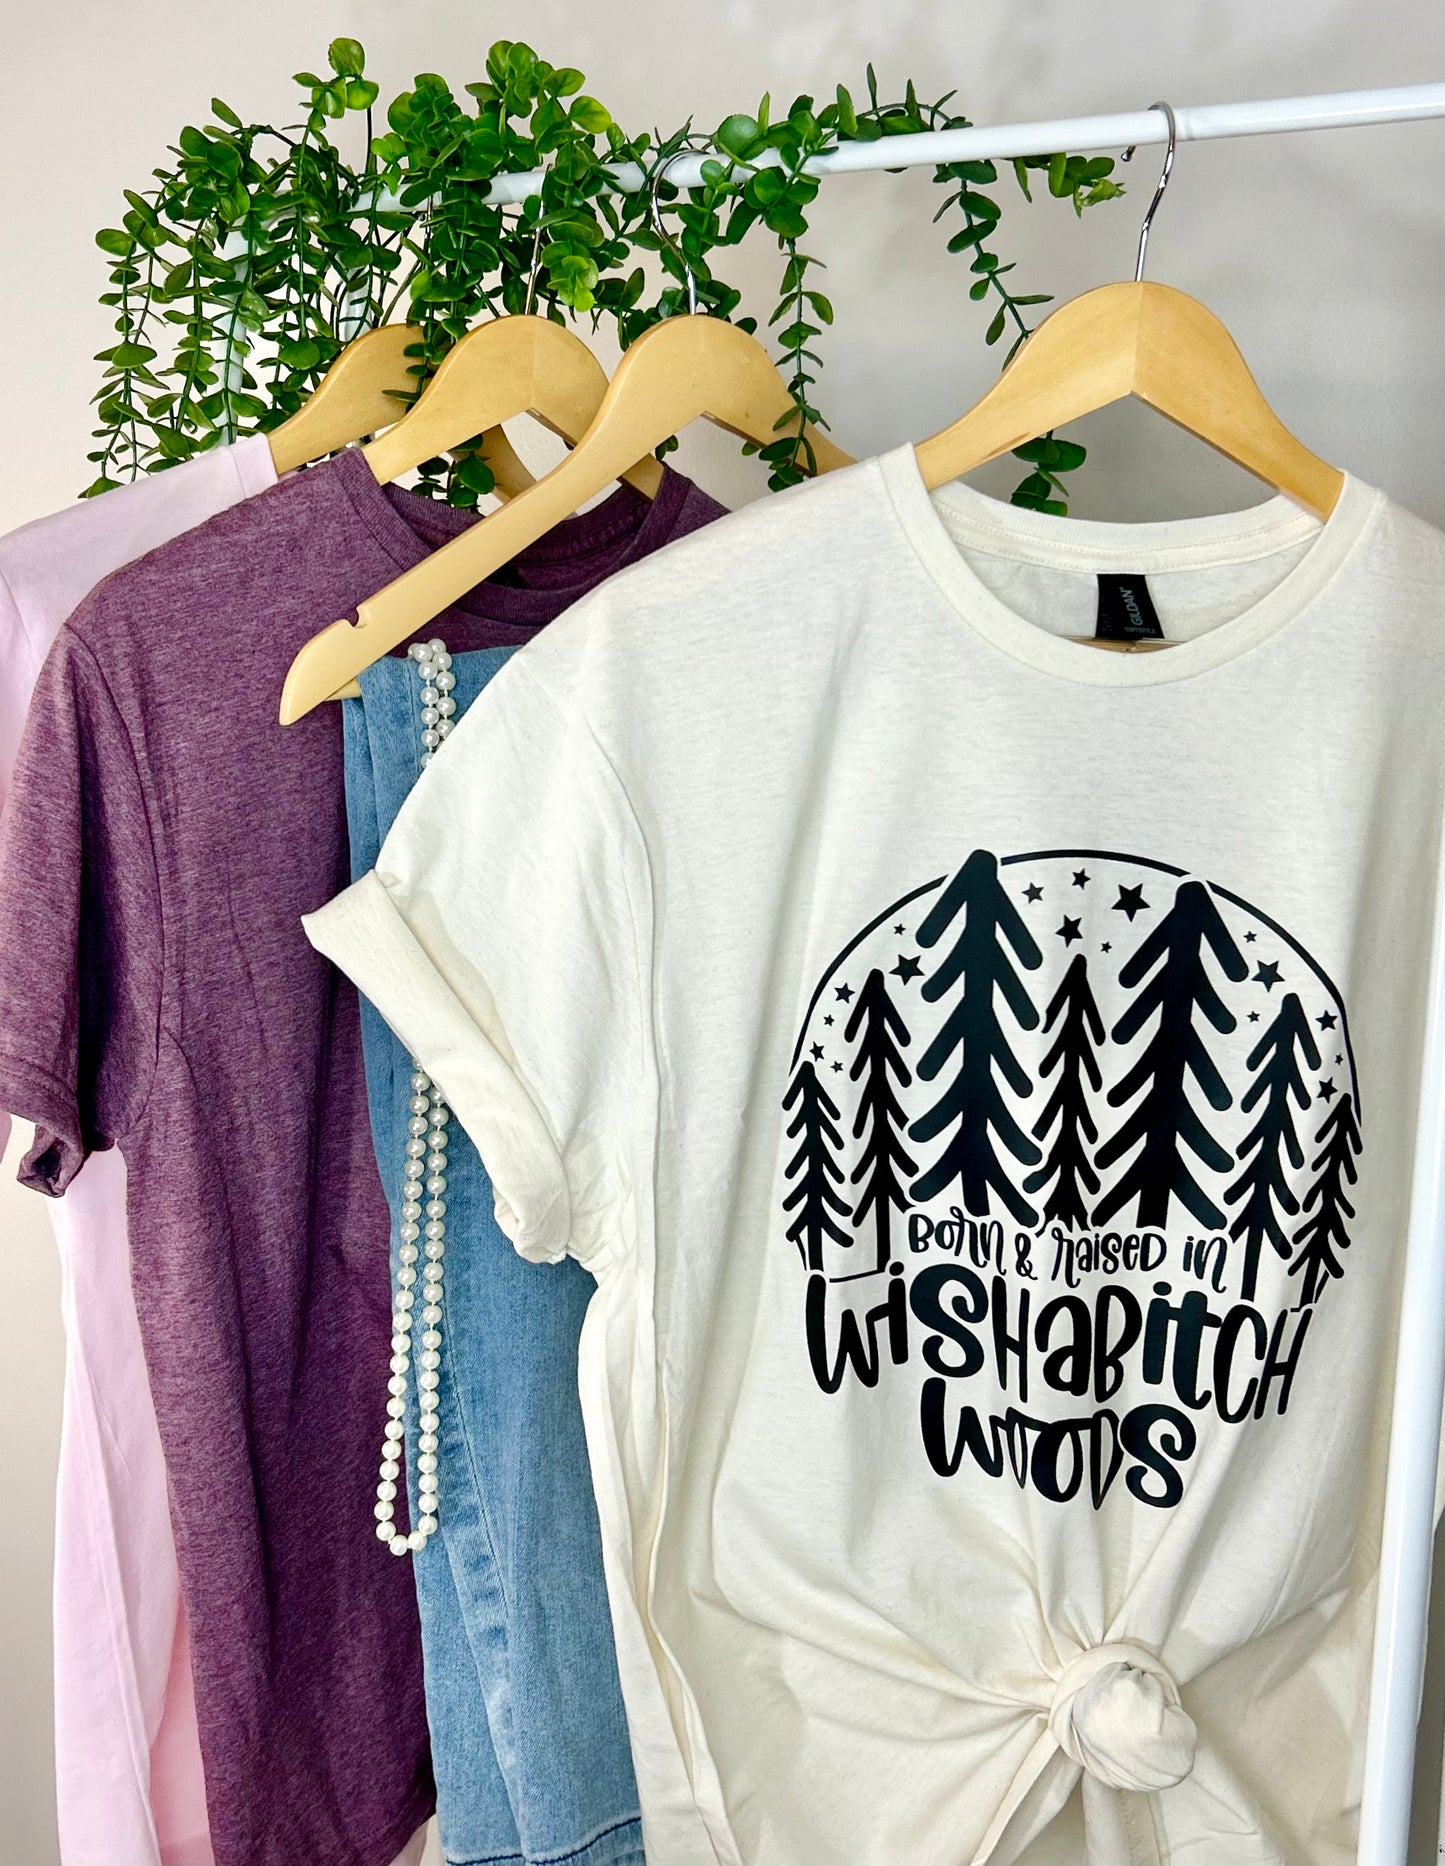 Wishabitch Woods T-Shirt